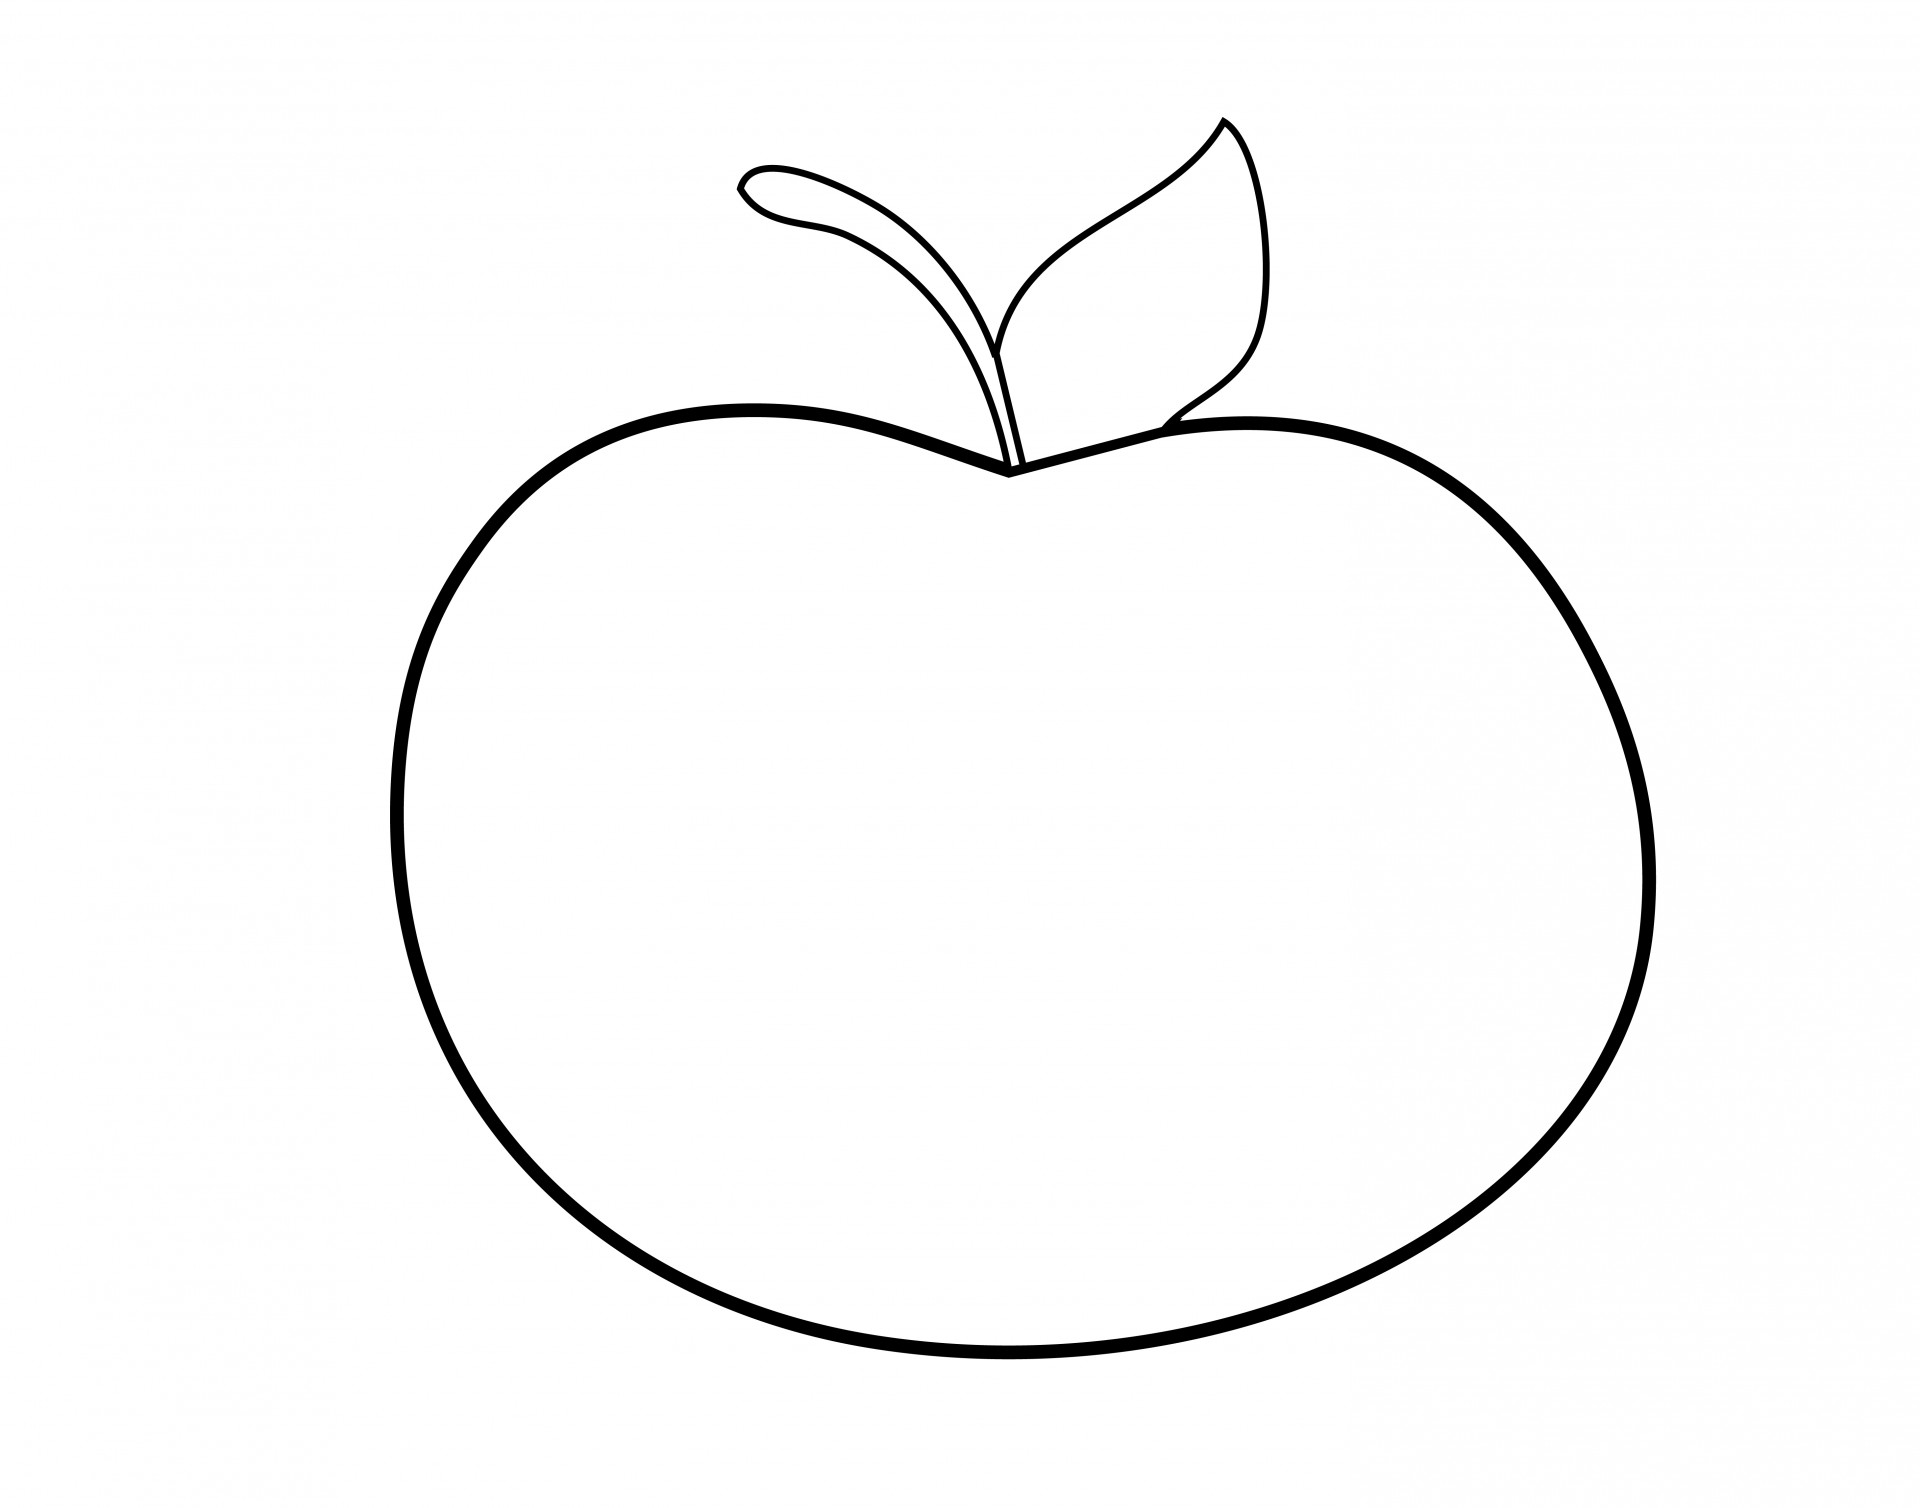 Download free photo of Apple,fruit,outline,shape,illustration from